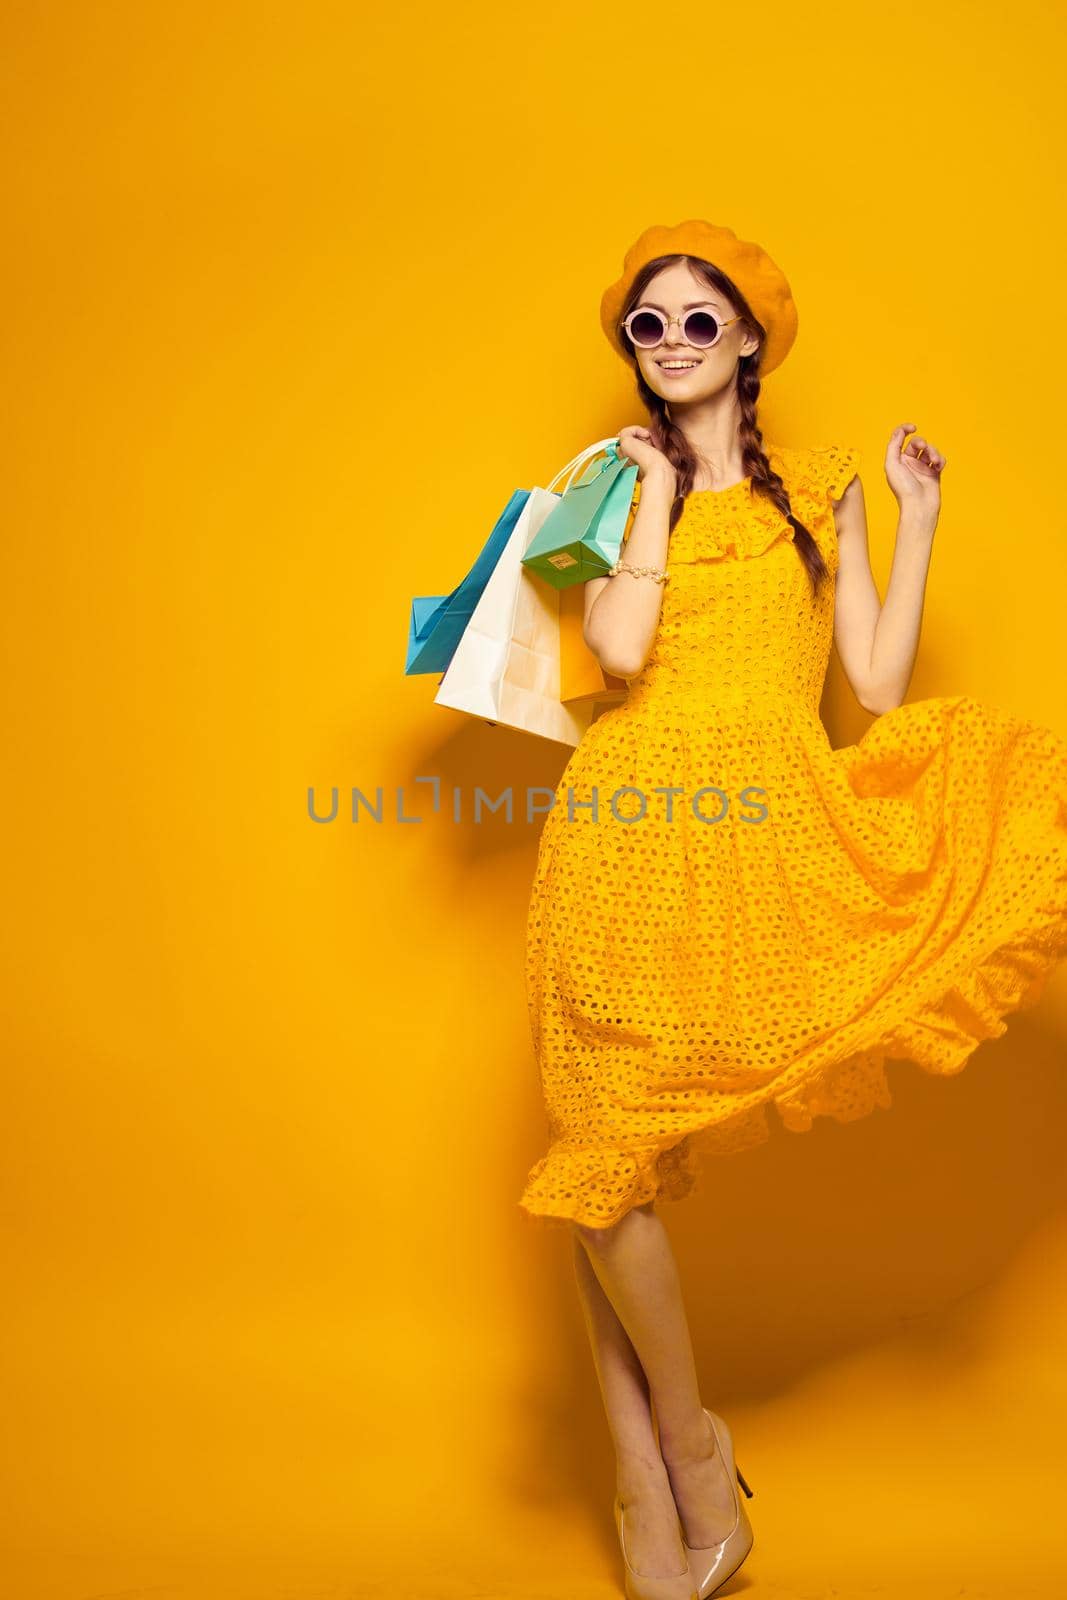 pretty woman shopping entertainment lifestyle yellow background. High quality photo